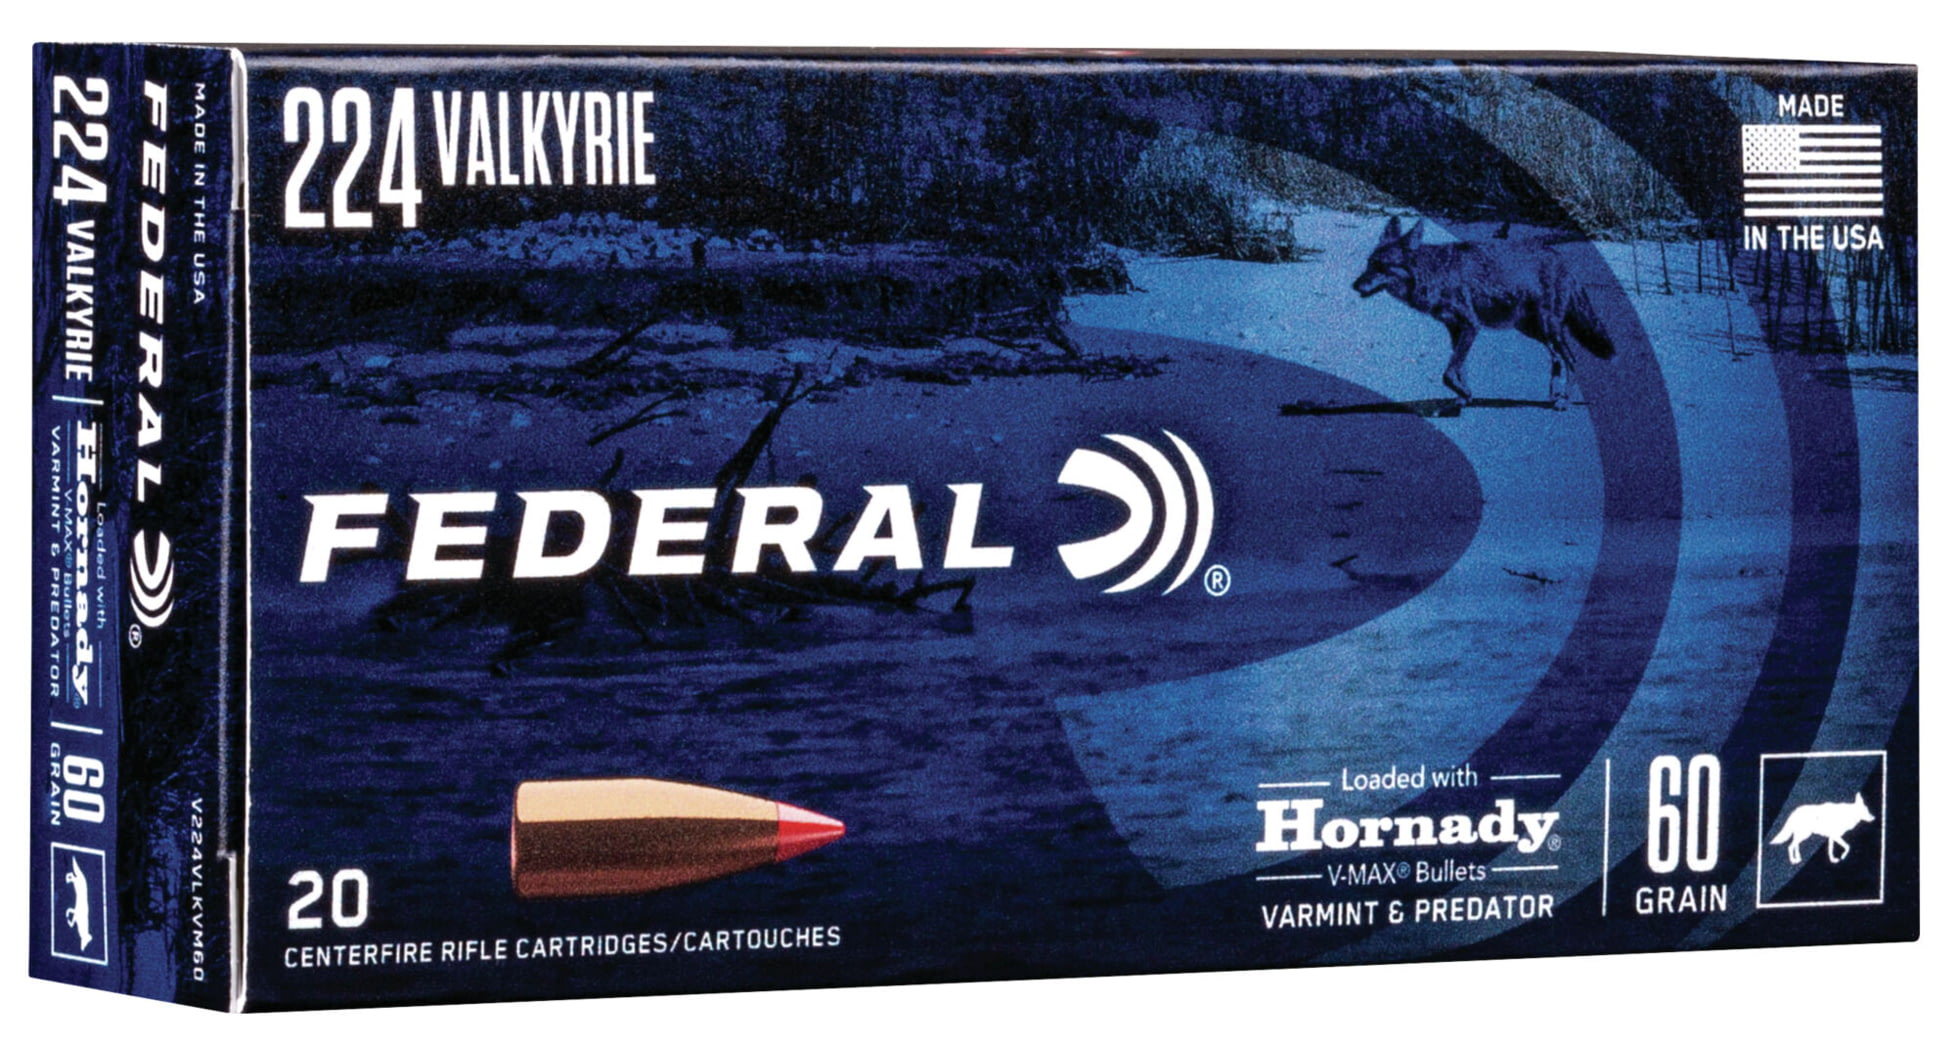 Federal Premium HORNDAY V-MAX .224 Valkyrie 60 grain Hornady V-Max Centerfire Rifle Ammunition